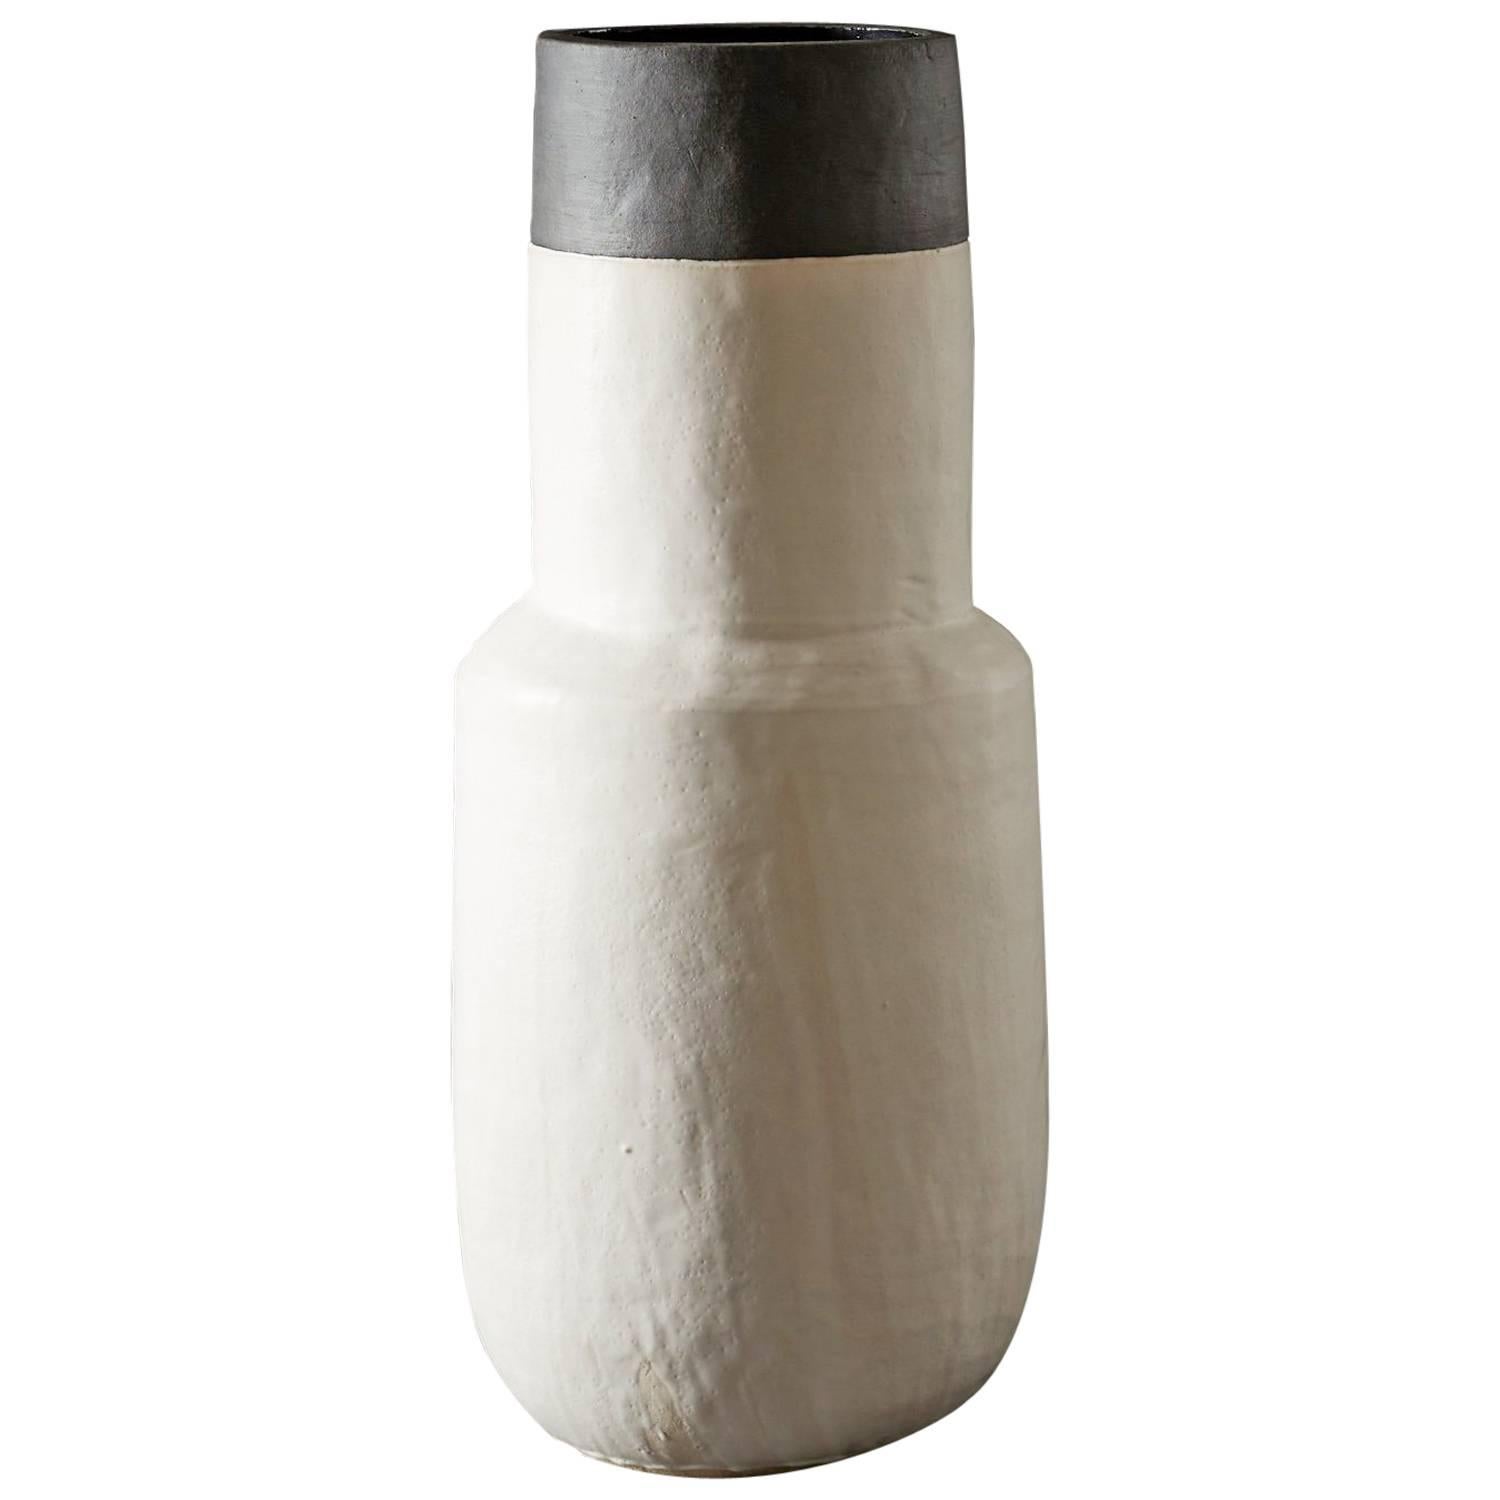 Large Handmade White and Black Ceramic Stoneware Vase by Daniel Reynolds